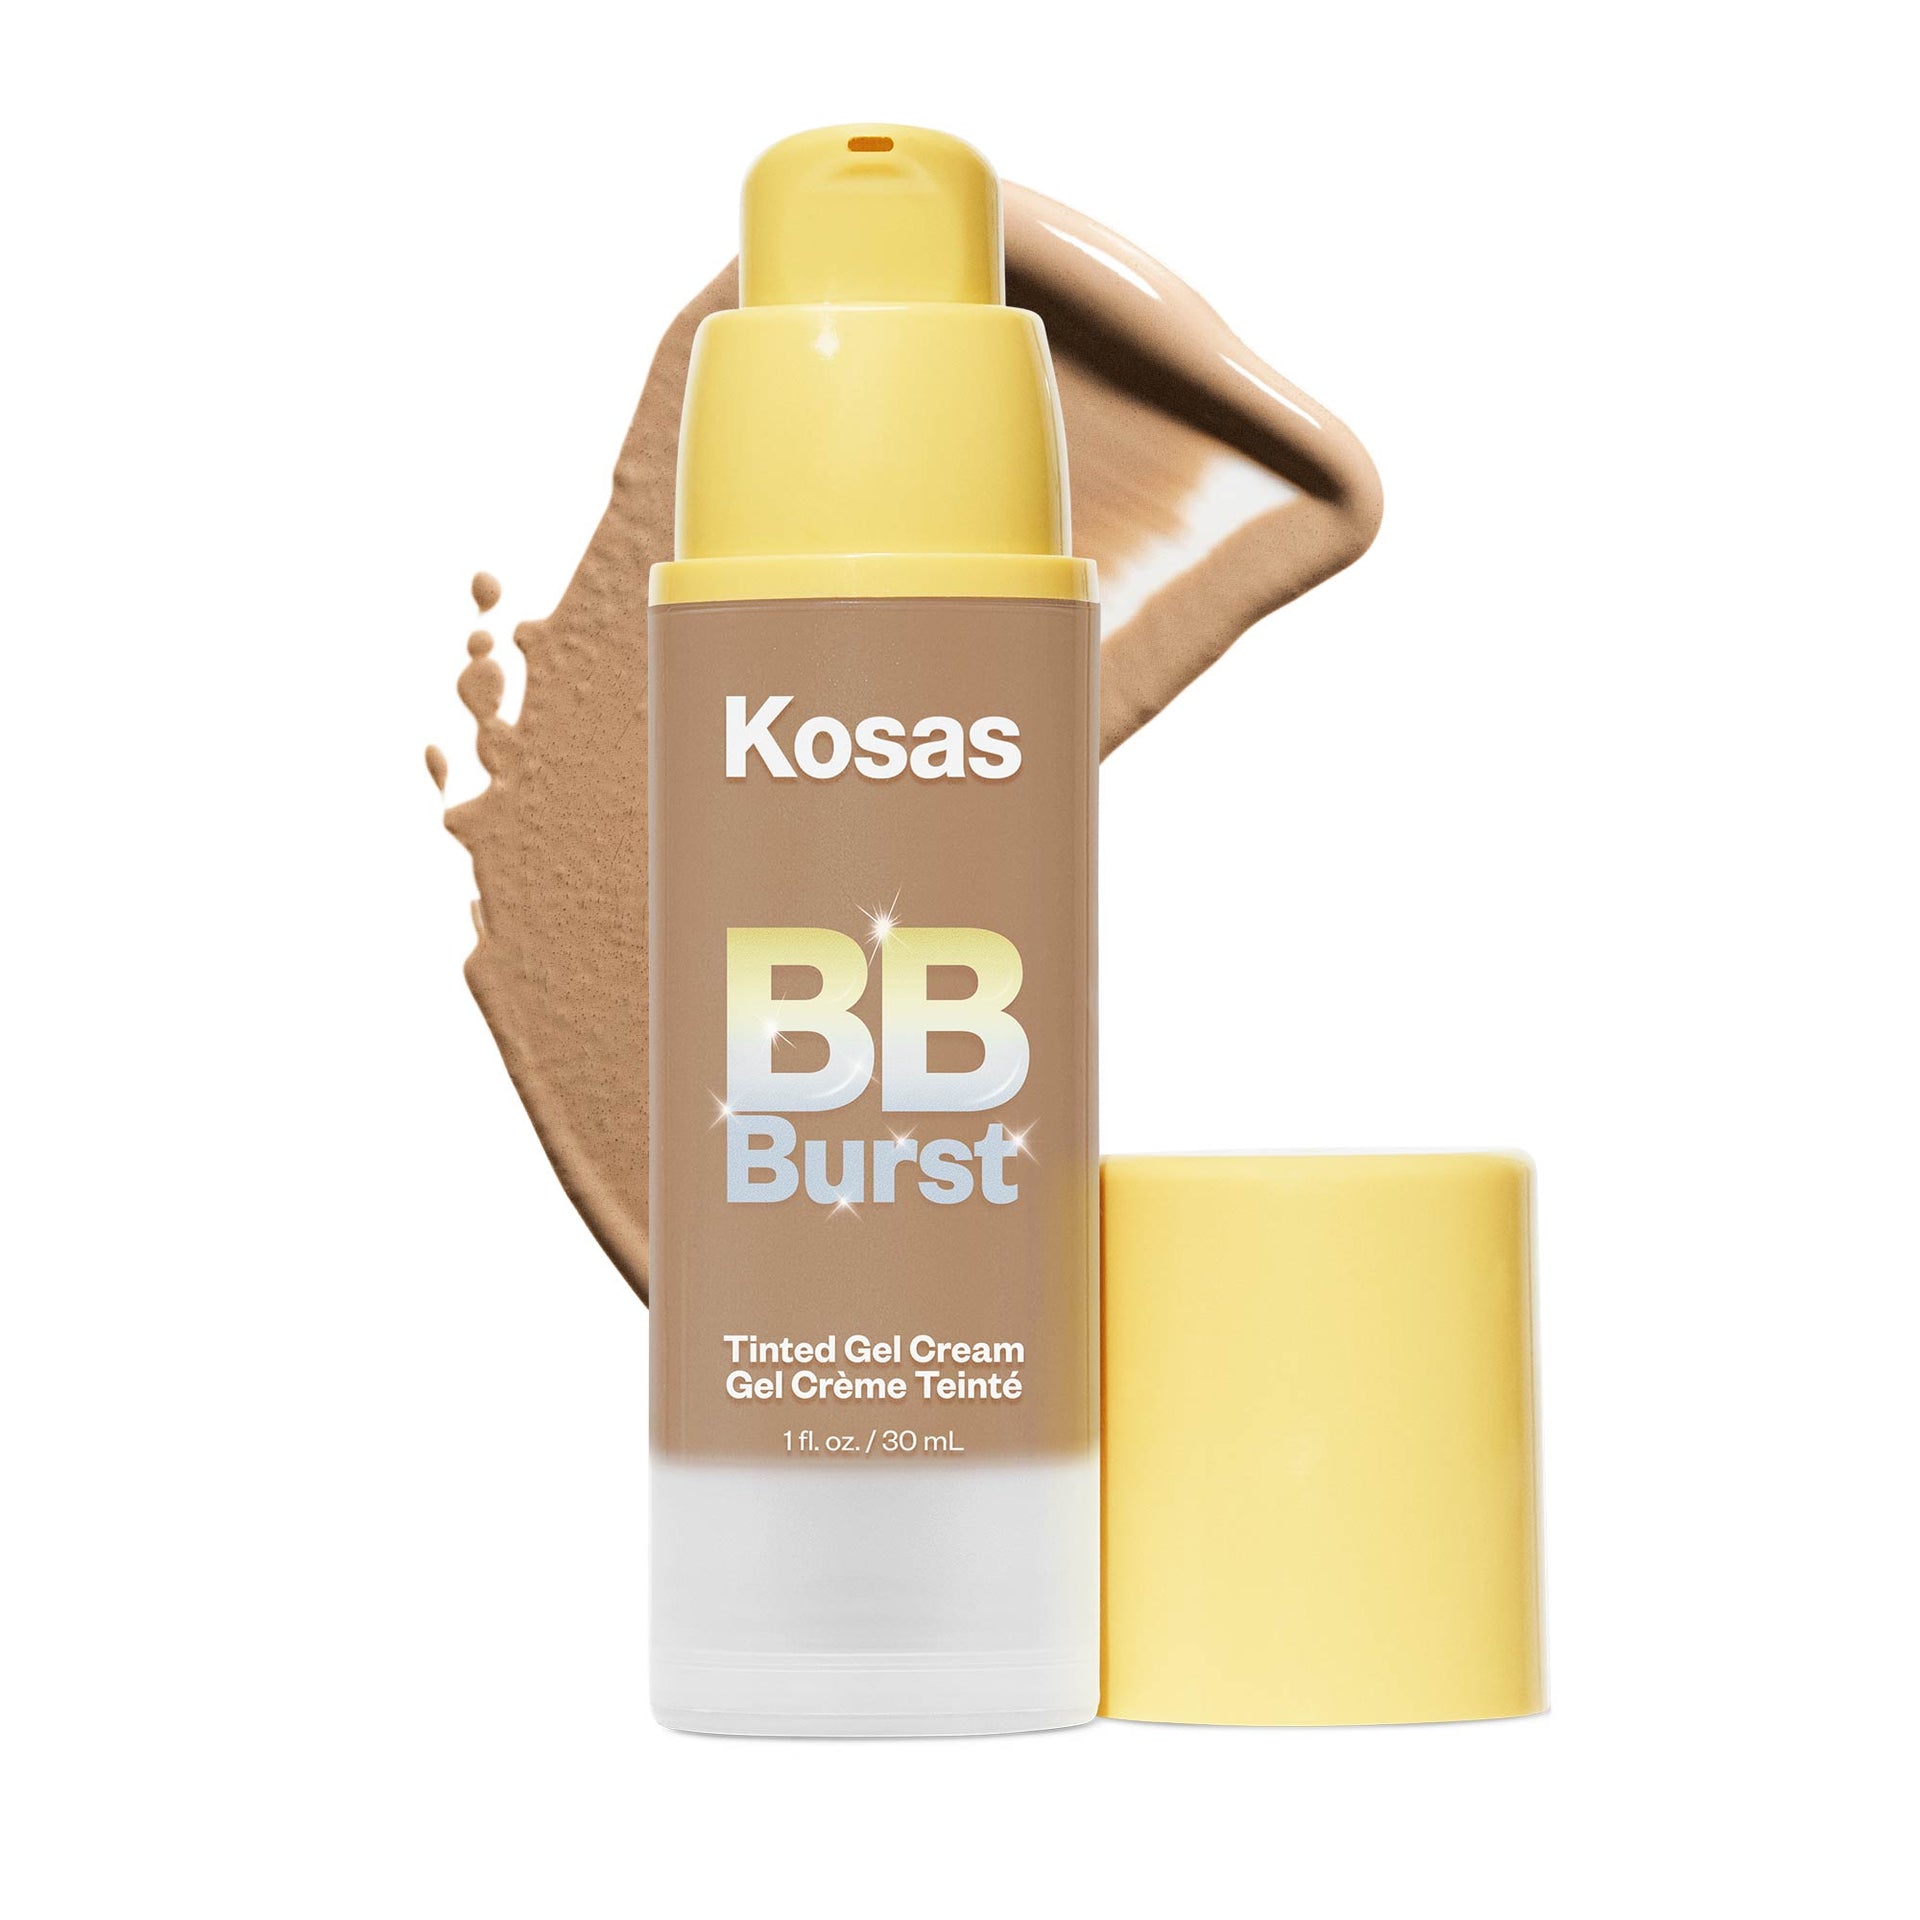 Kosas BB Burst in the shade Medium Deep Neutral 33